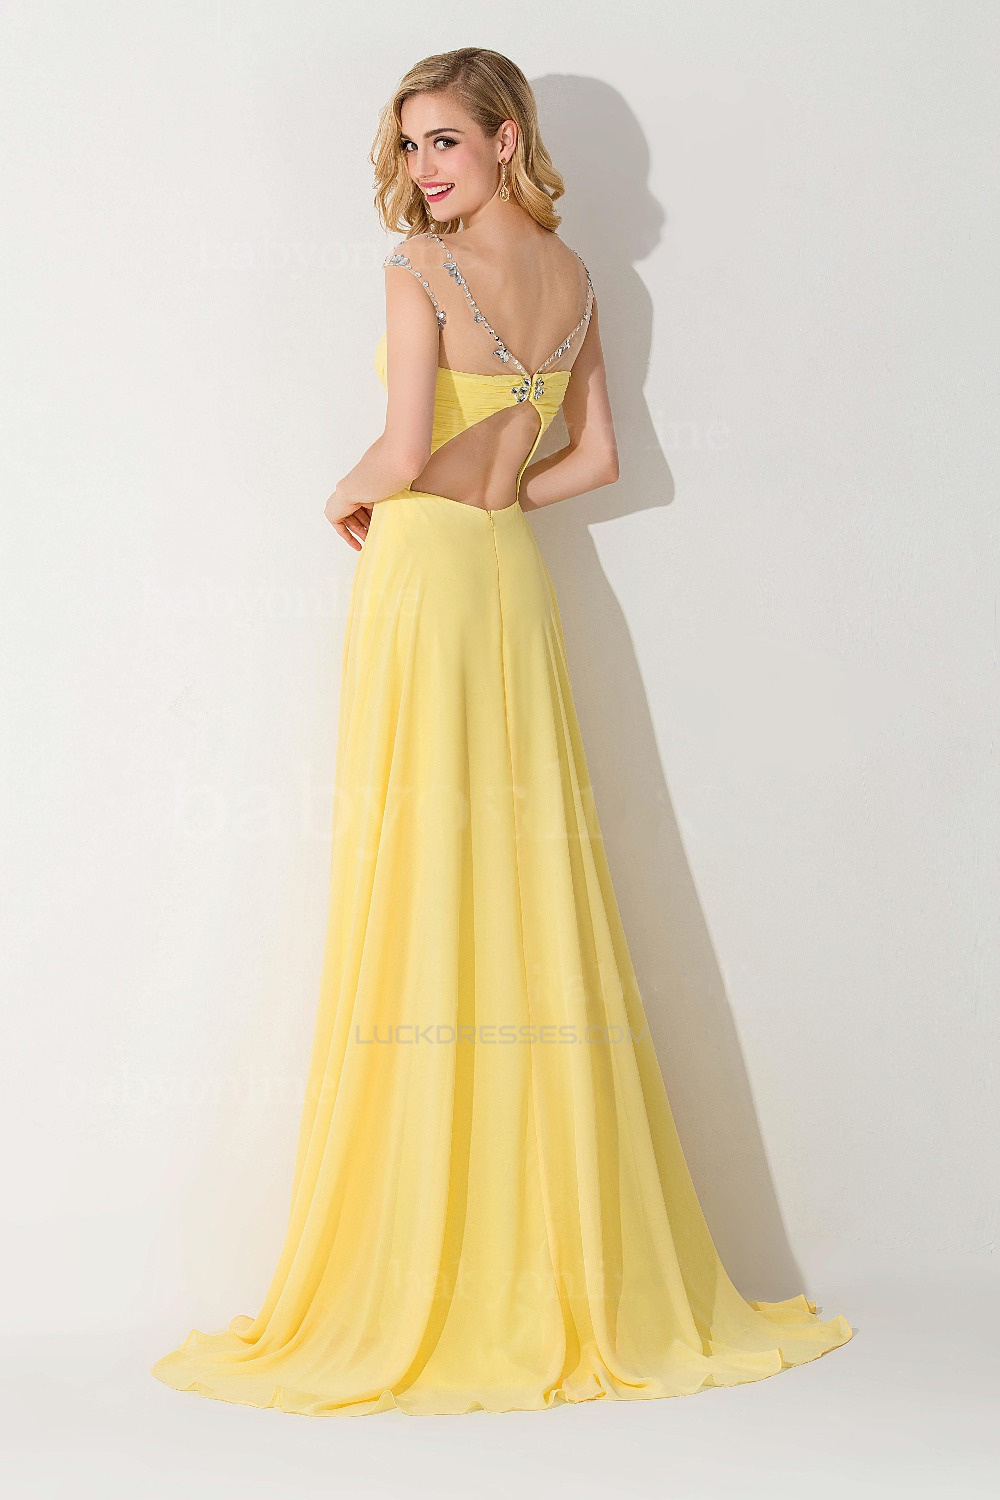 A-Line Bateau Long Yellow Chiffon Prom Evening Formal Dresses ED011667